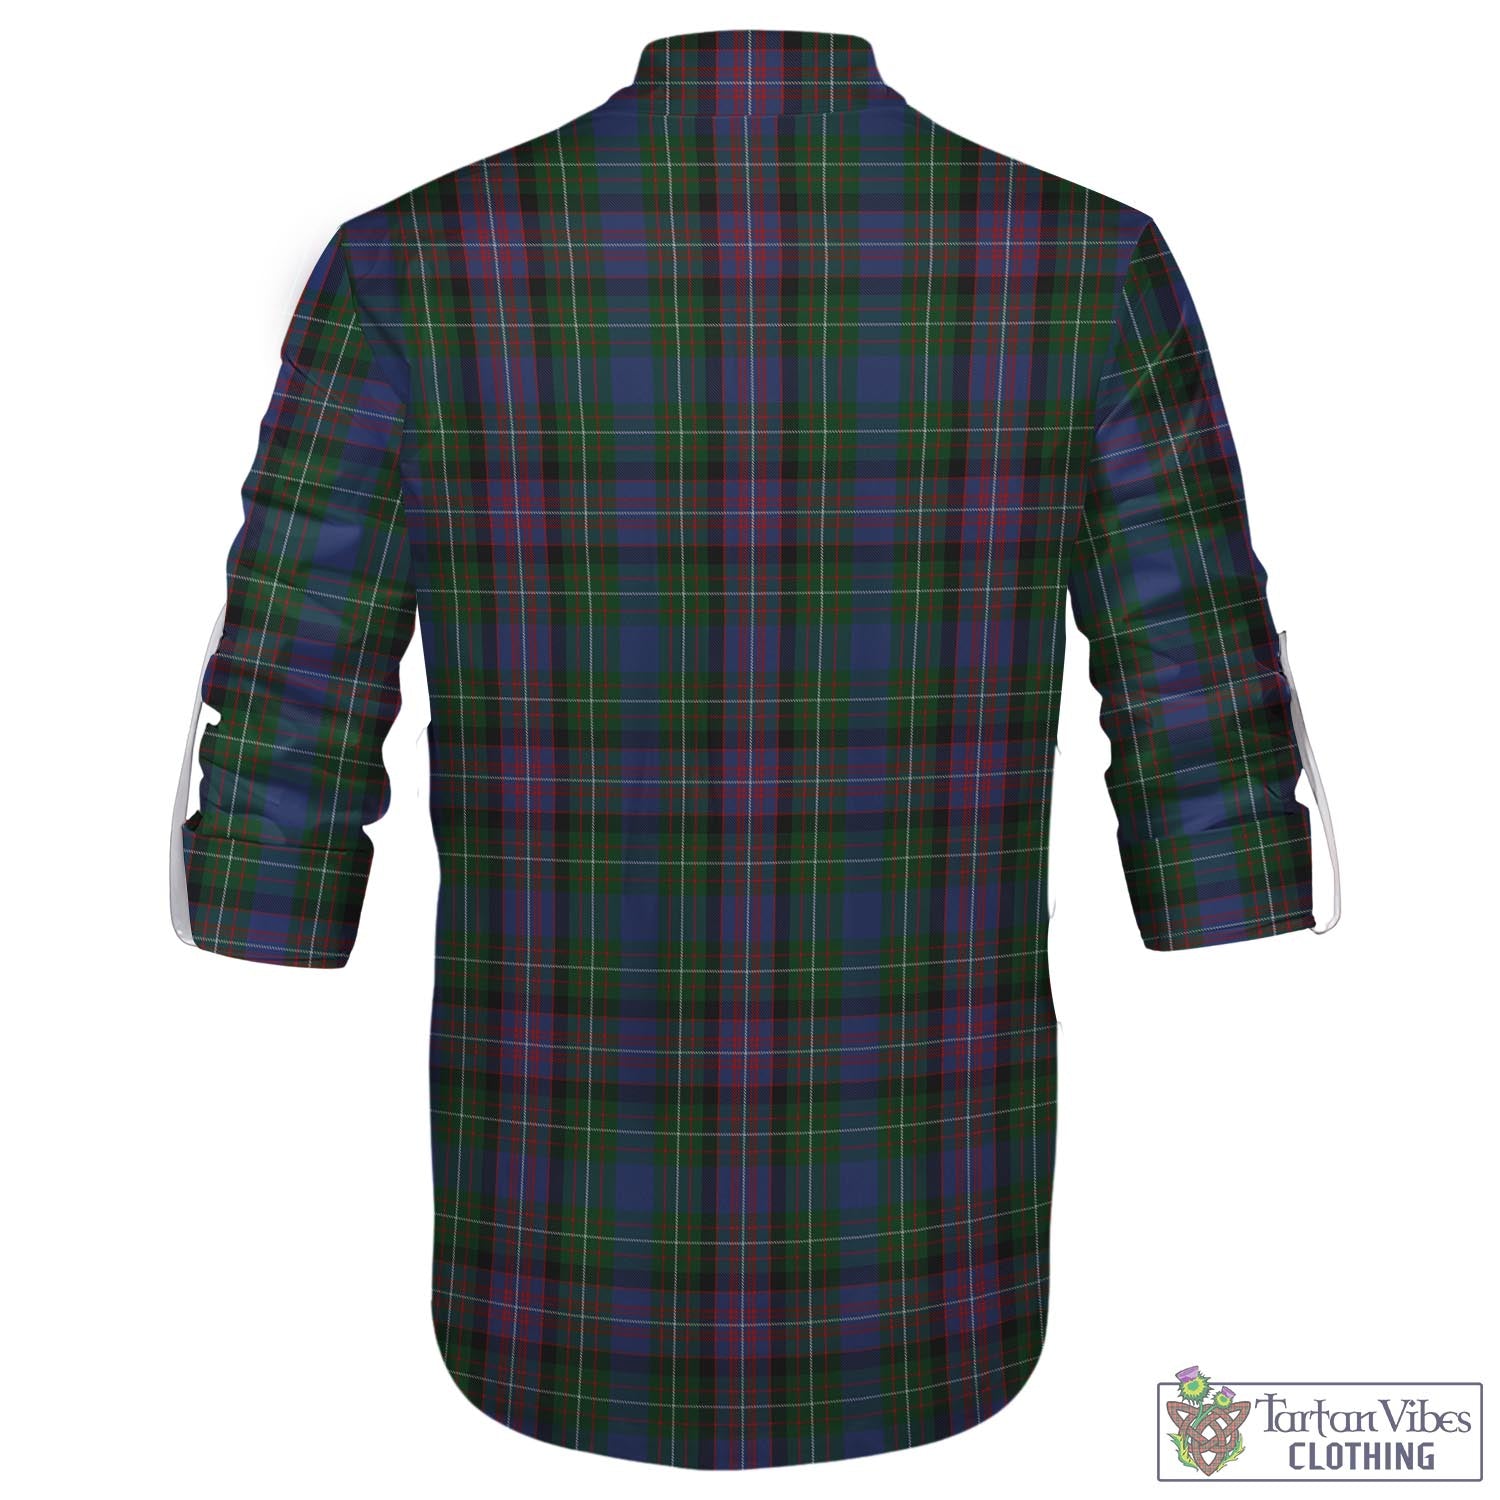 Tartan Vibes Clothing Rankin Tartan Men's Scottish Traditional Jacobite Ghillie Kilt Shirt